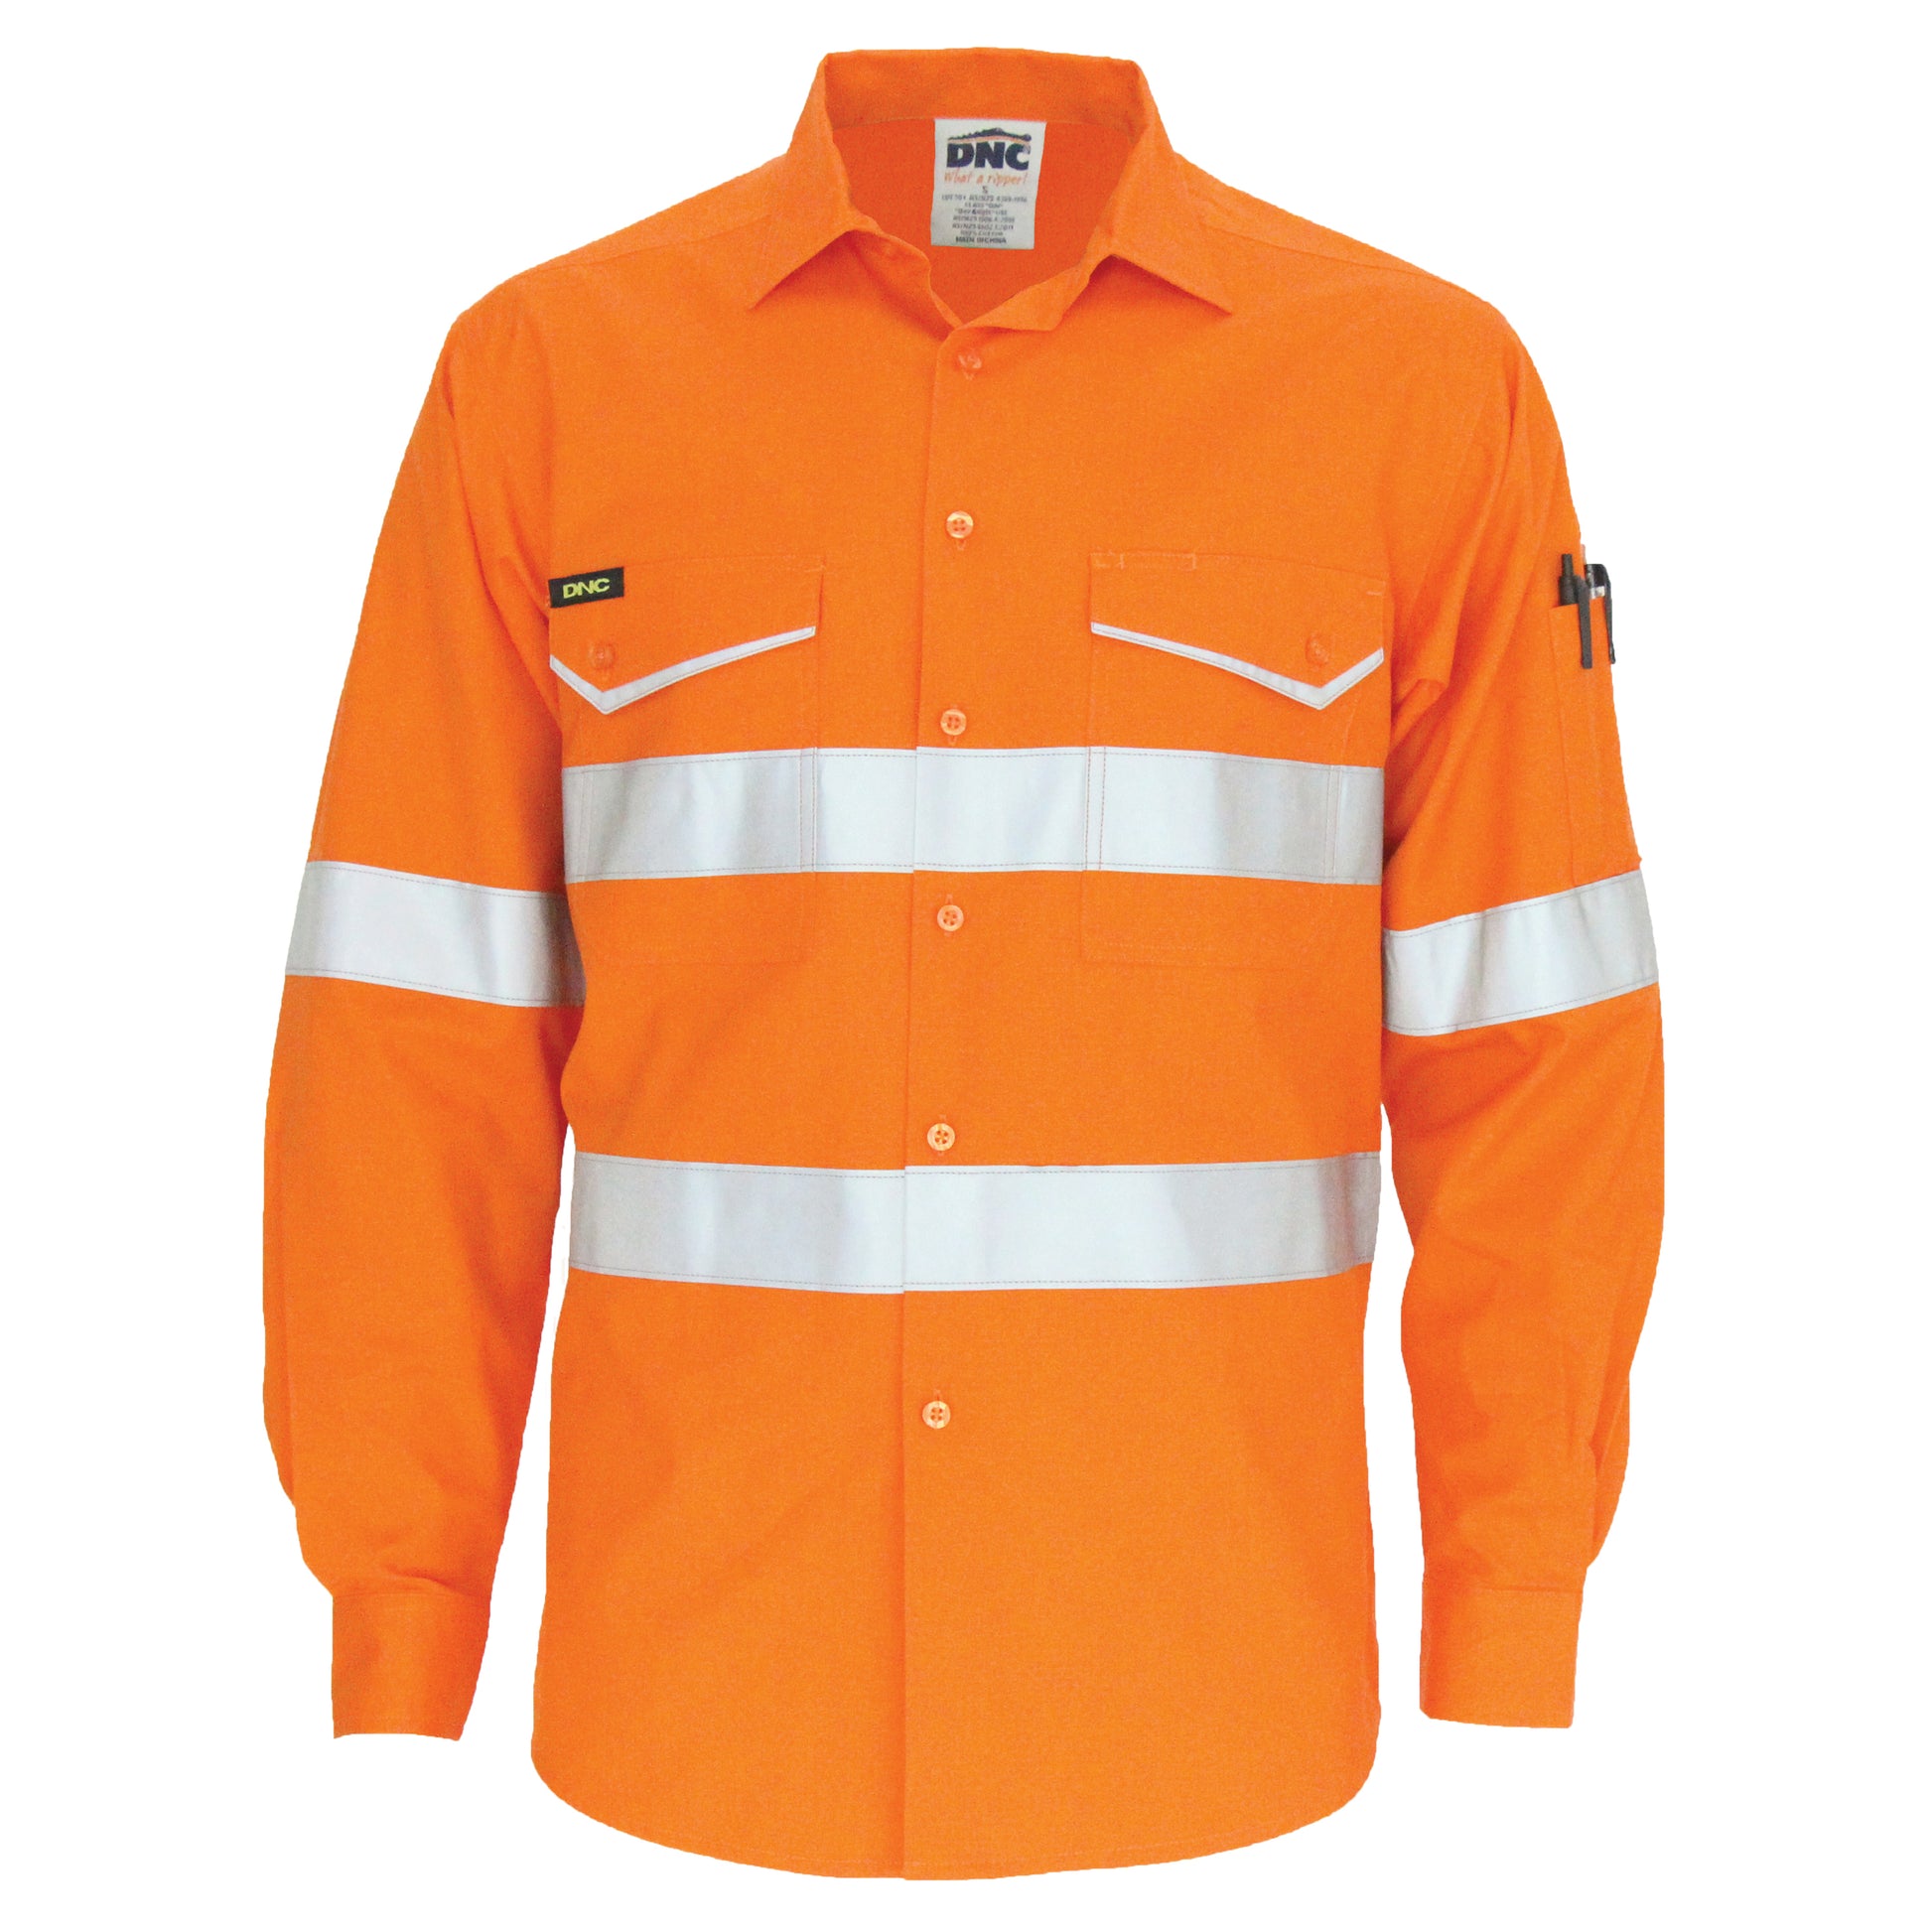 DNC RipStop Cotton Cool Shirt with CSR Reflective Tape, L/S 3590 - Star Uniforms Australia